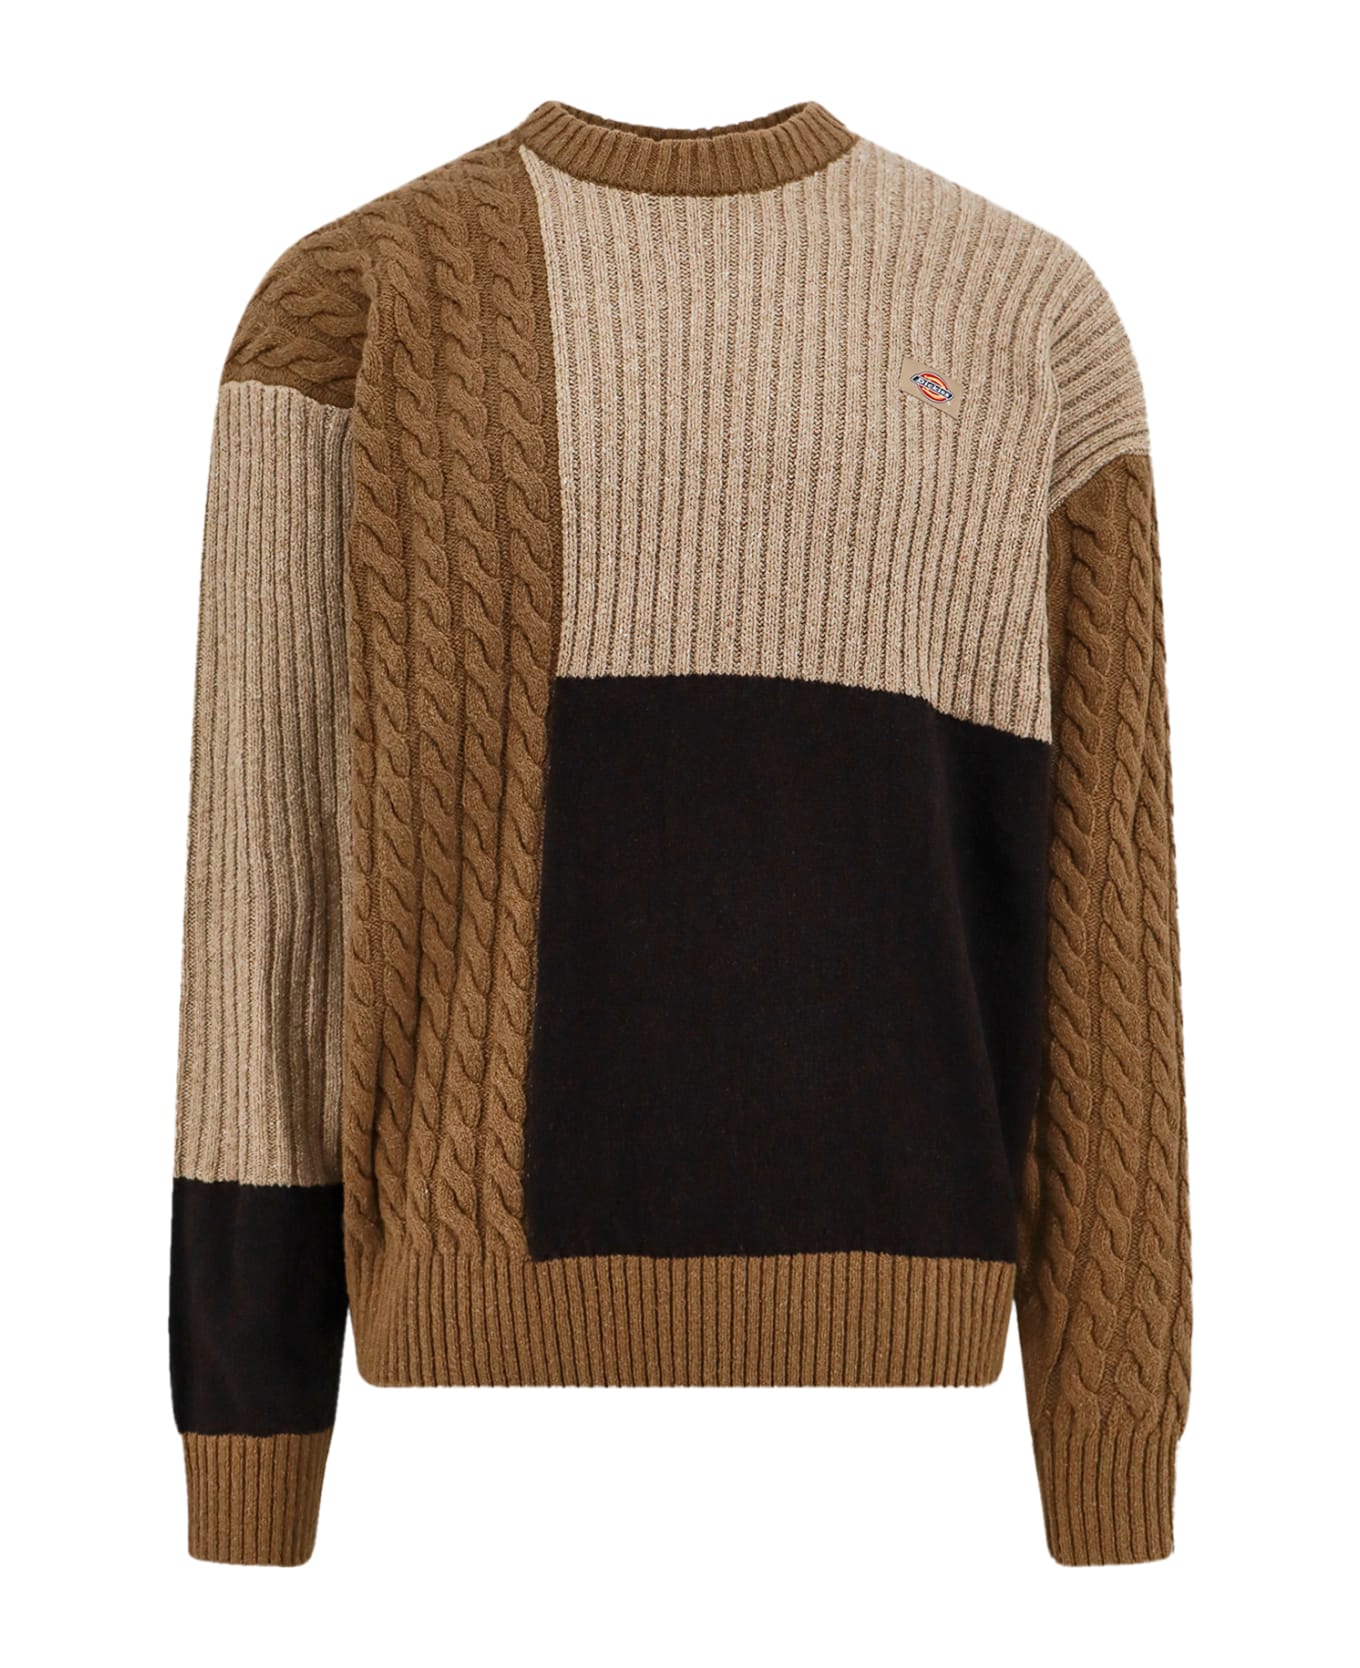 Dickies Sweater - Brown